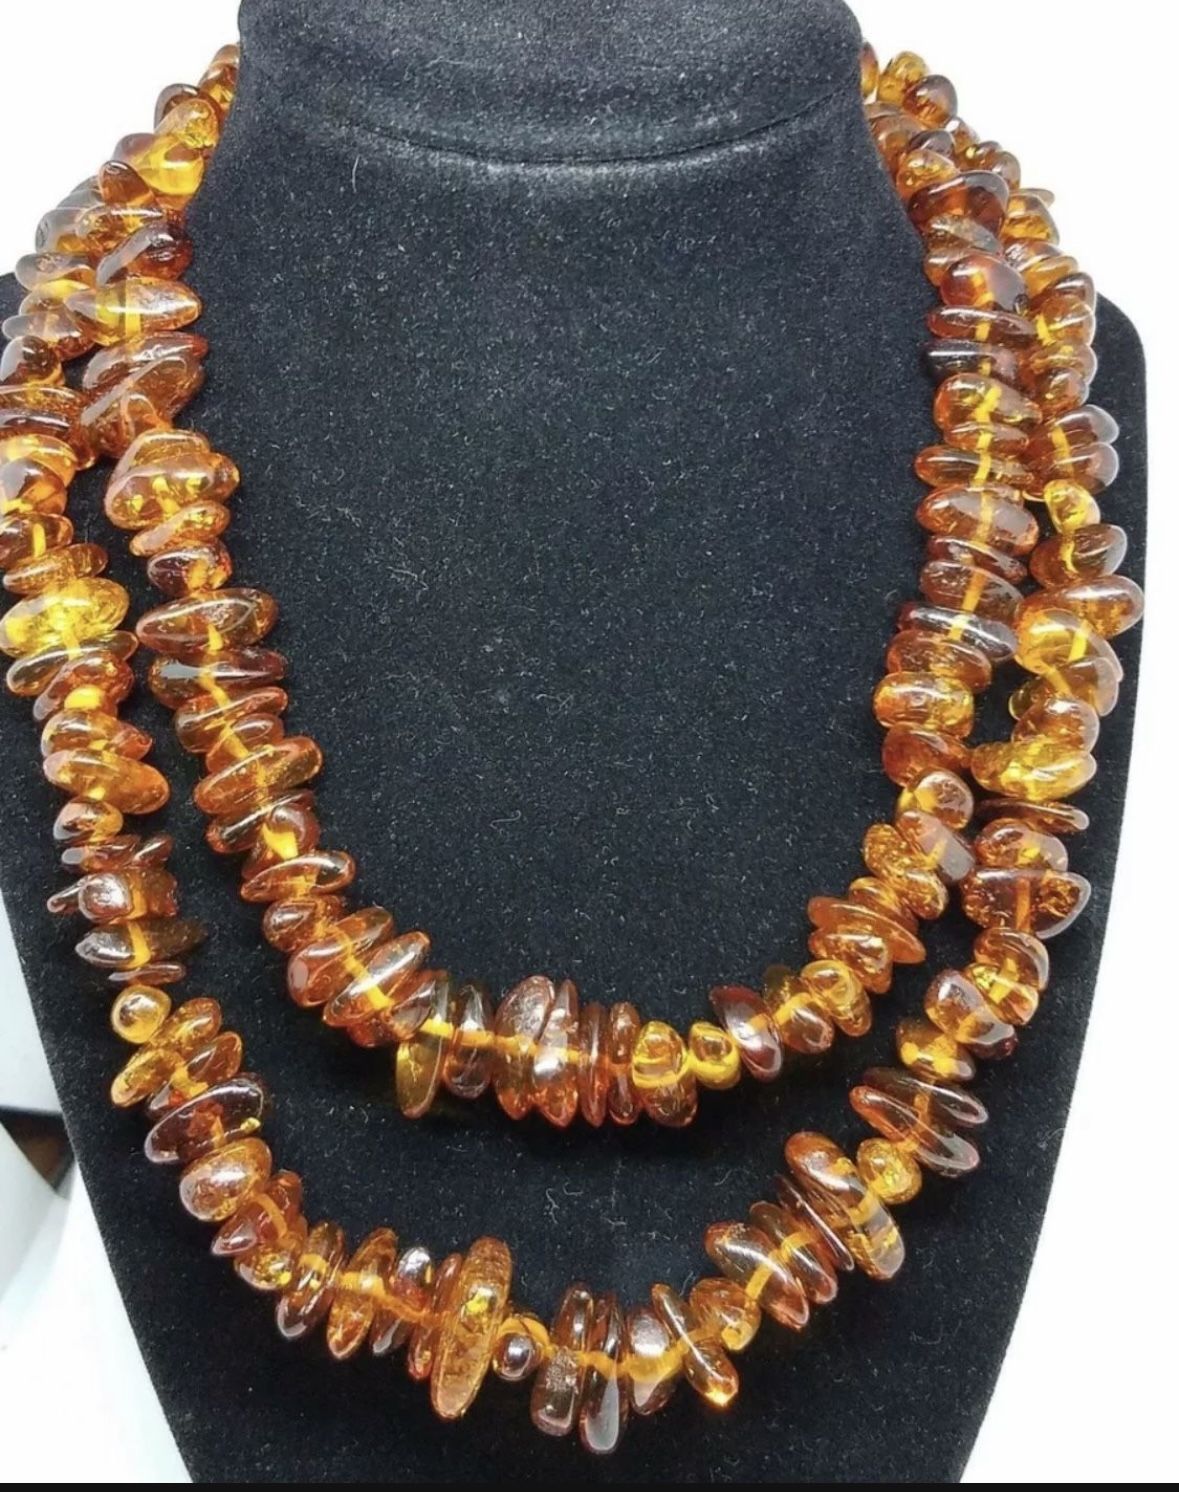 Stunning 100 Grams Huge Large 35” Long Vintage Baltic Amber Statement Necklace